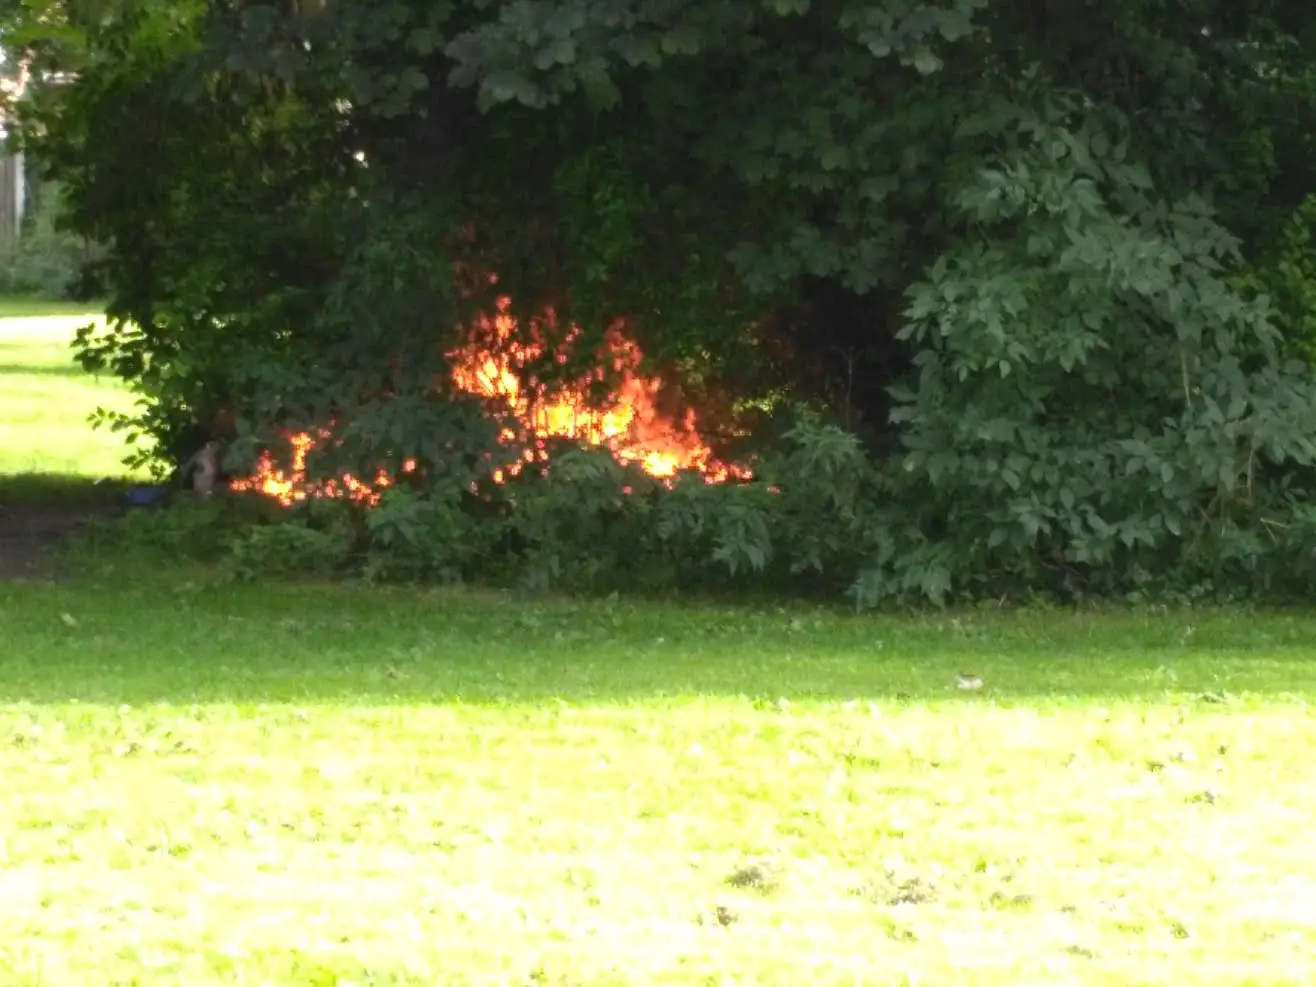 The fire in Larkhill Park on Saturday